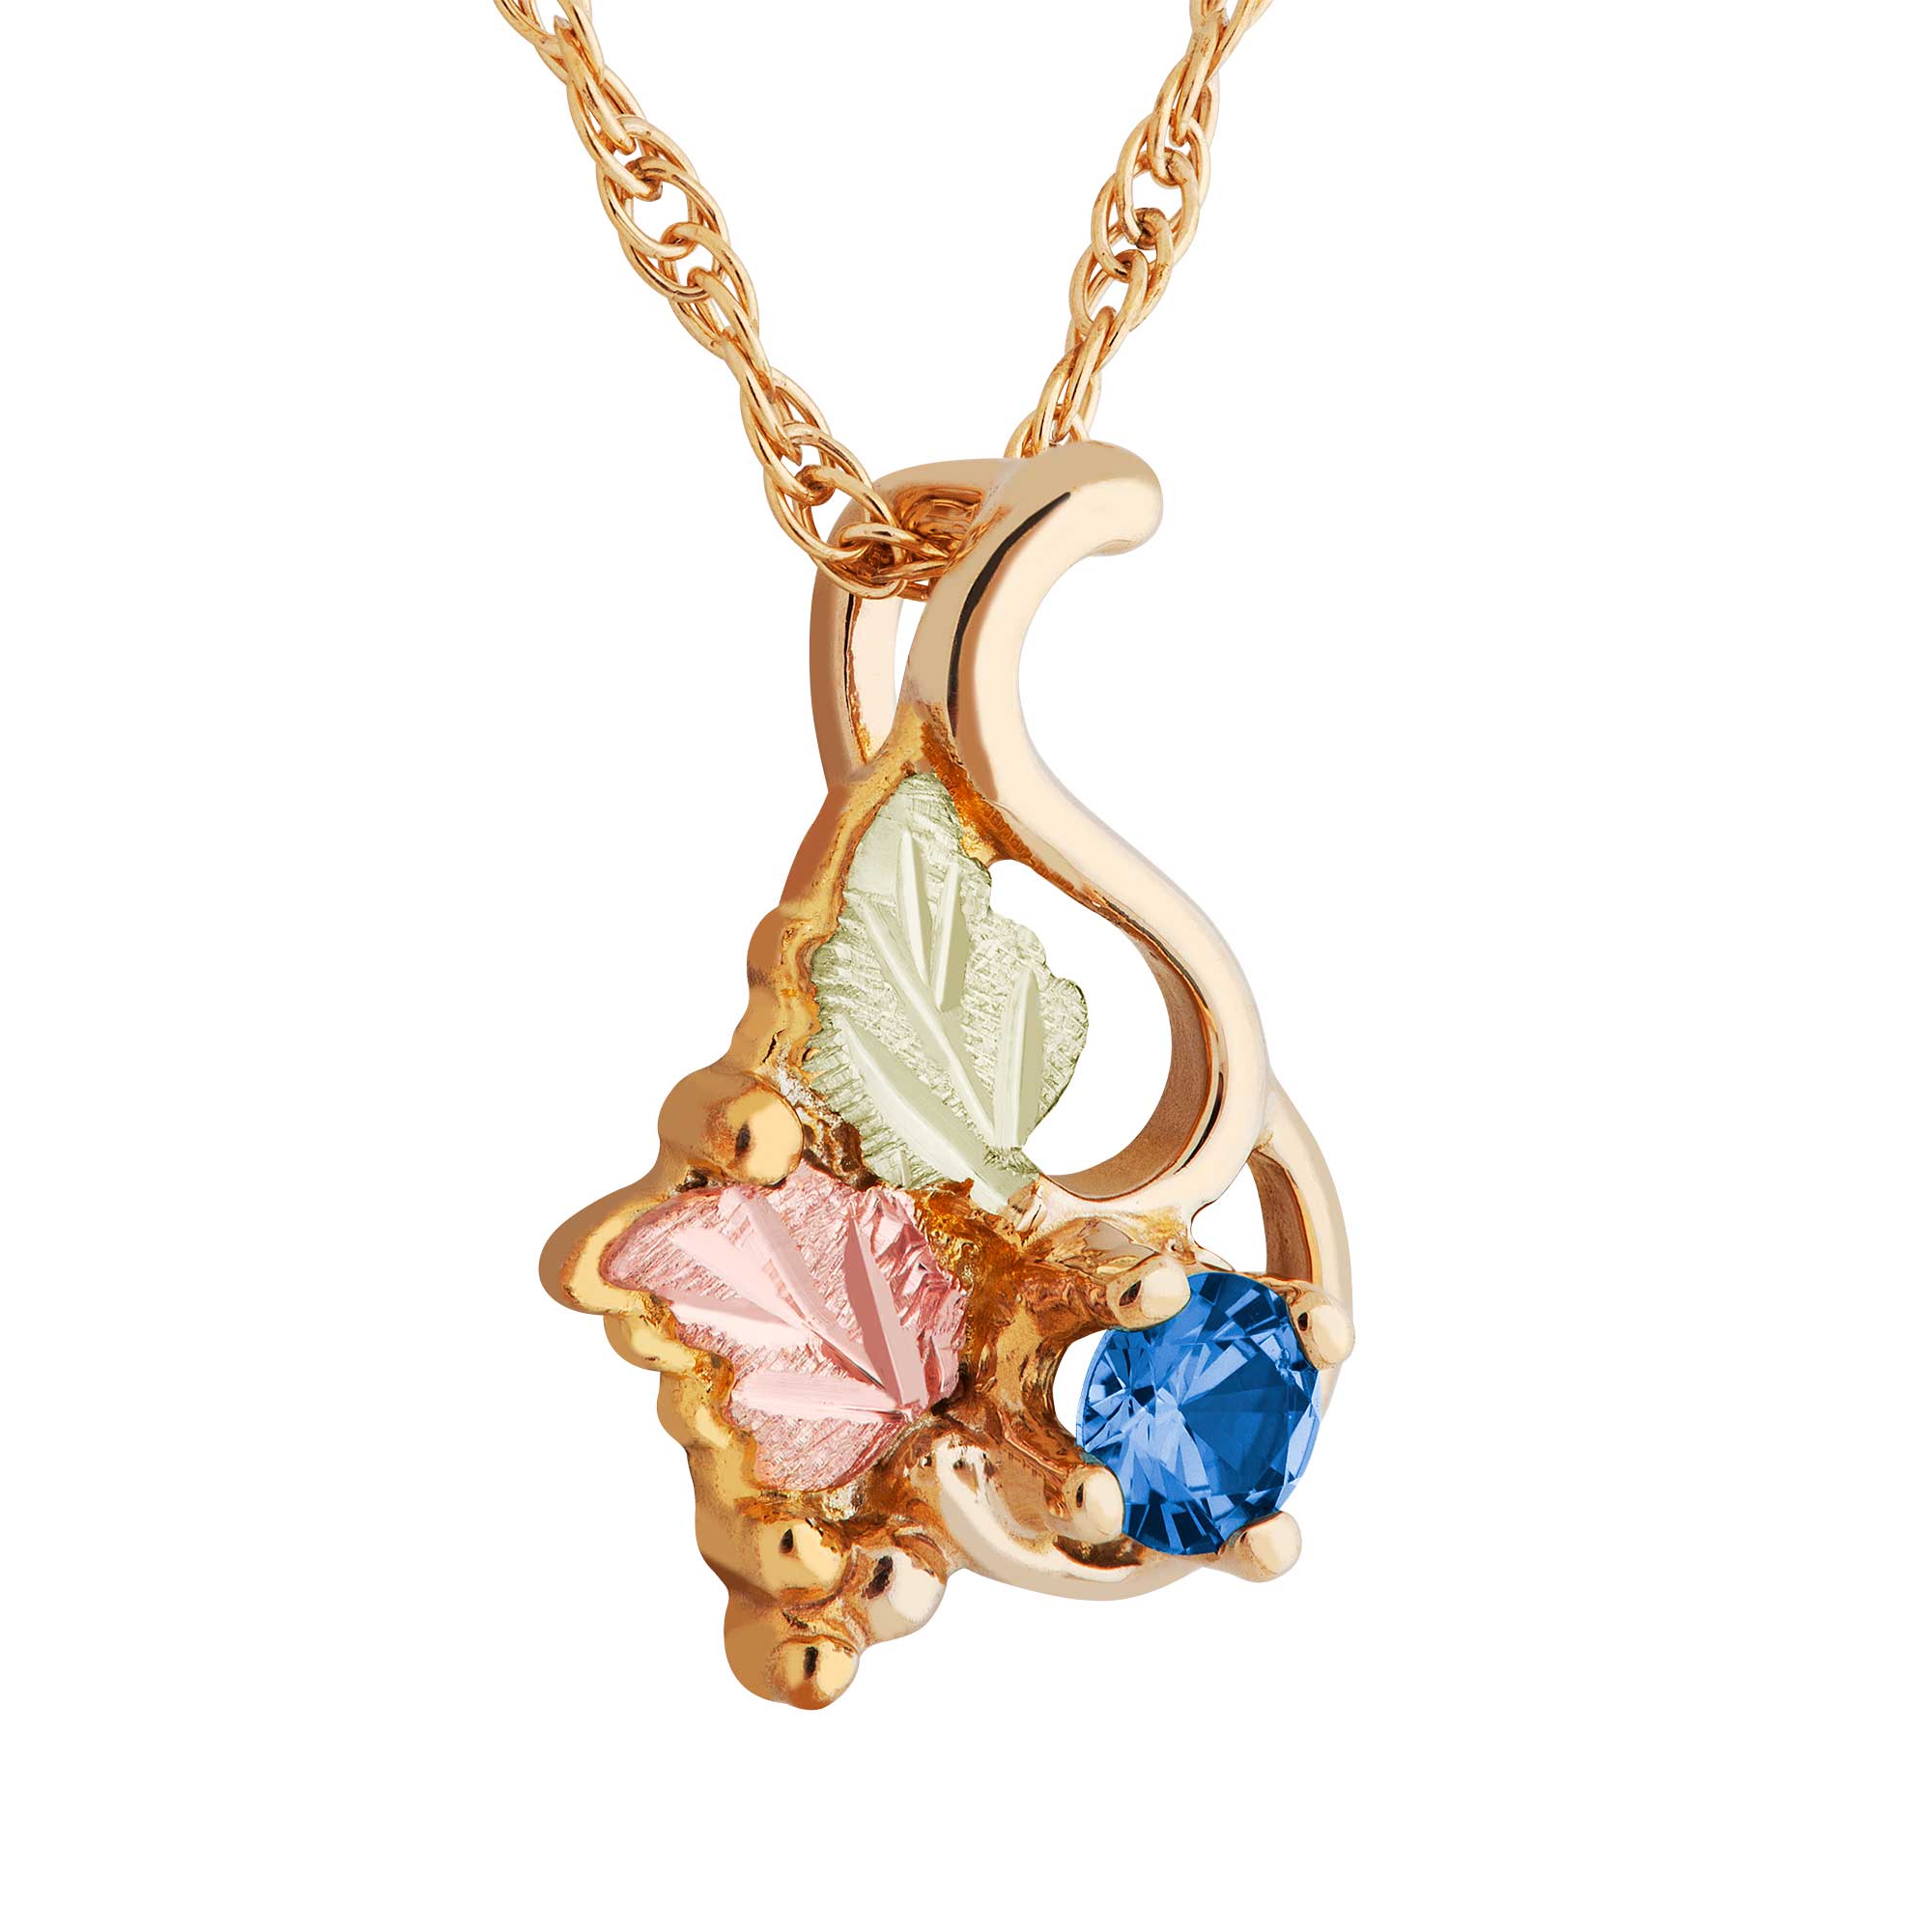 Blue Sapphire Gemstone Pendant Necklace, 12k Green and Rose Gold Black Hills Gold Motif. 